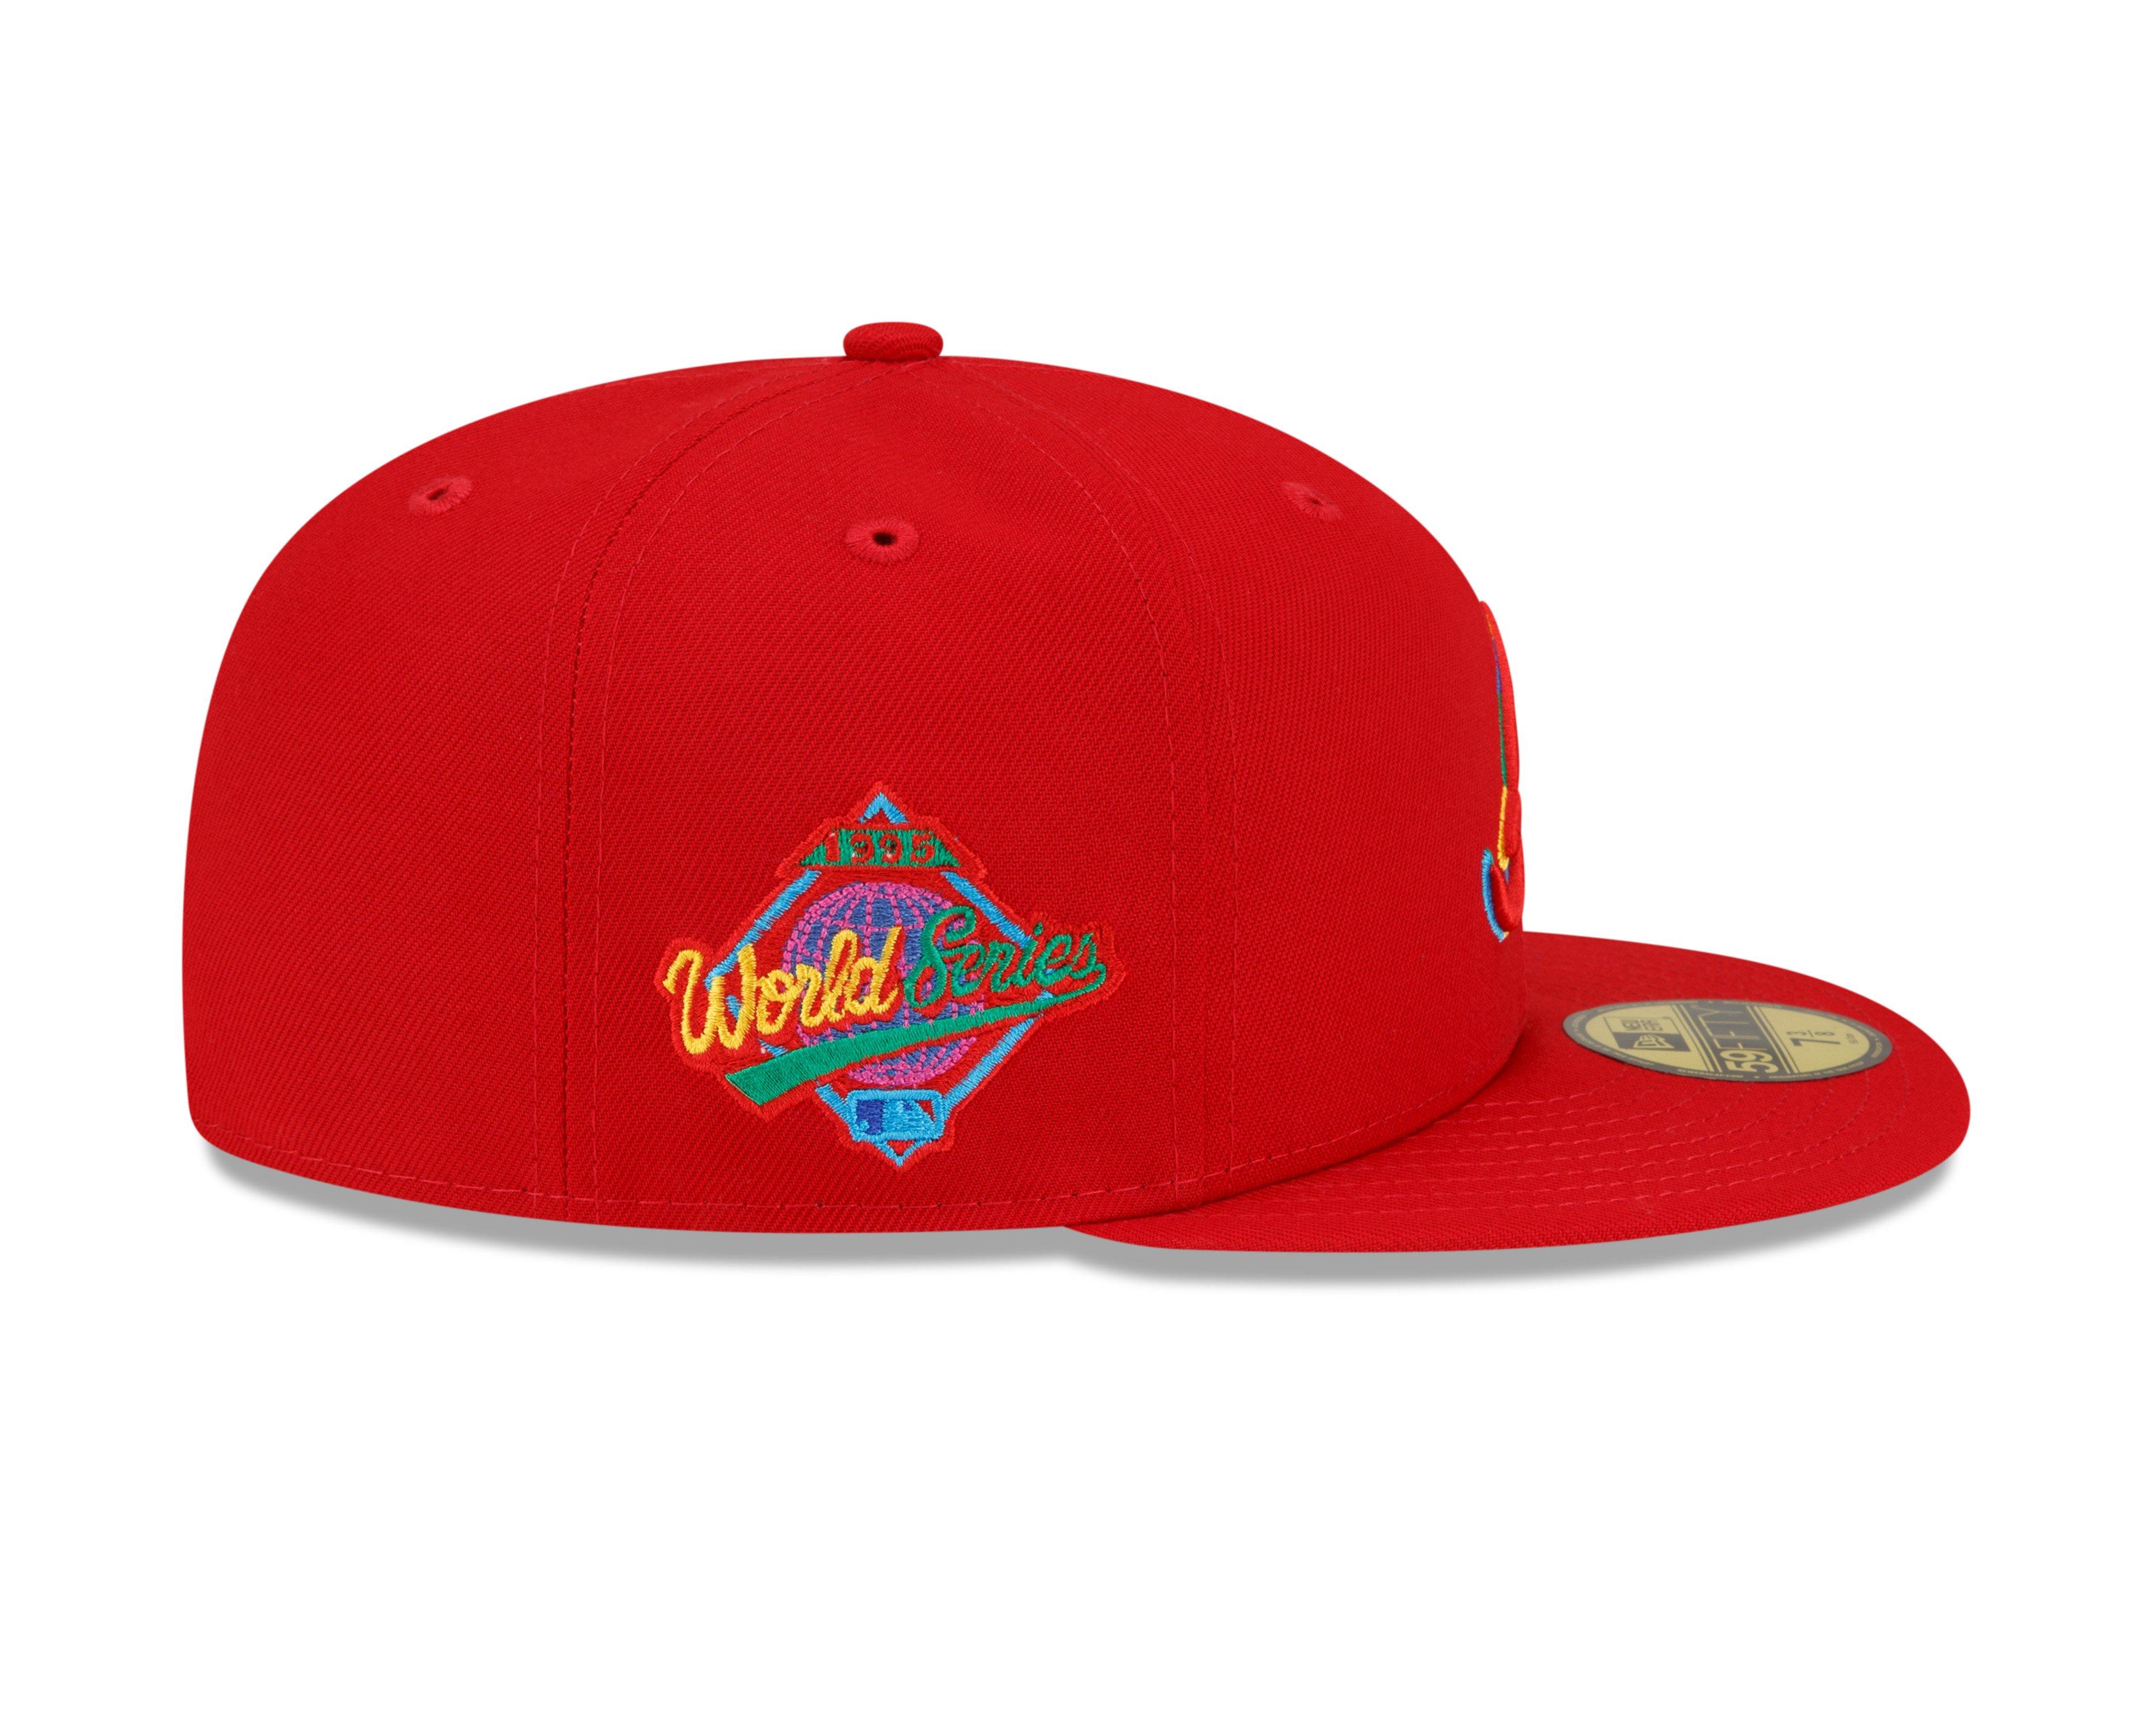 Atlanta Braves MLB Team Ripstop New Era 9fifty red cap